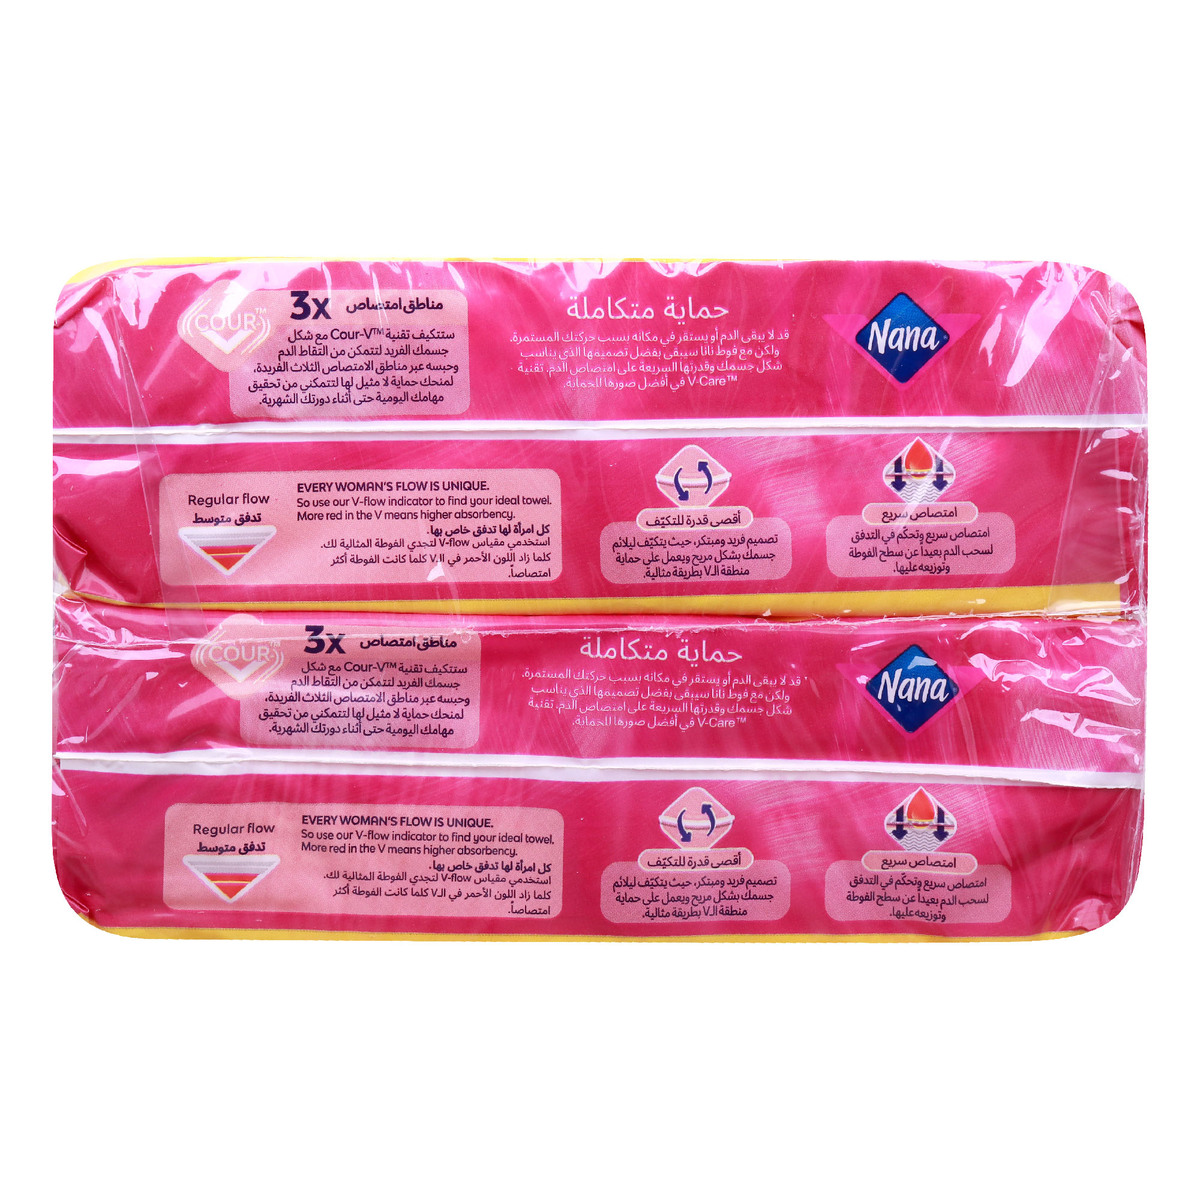 Nana Ultra Thin Regular Sanitary Pads Value Pack 2 x 20 pcs